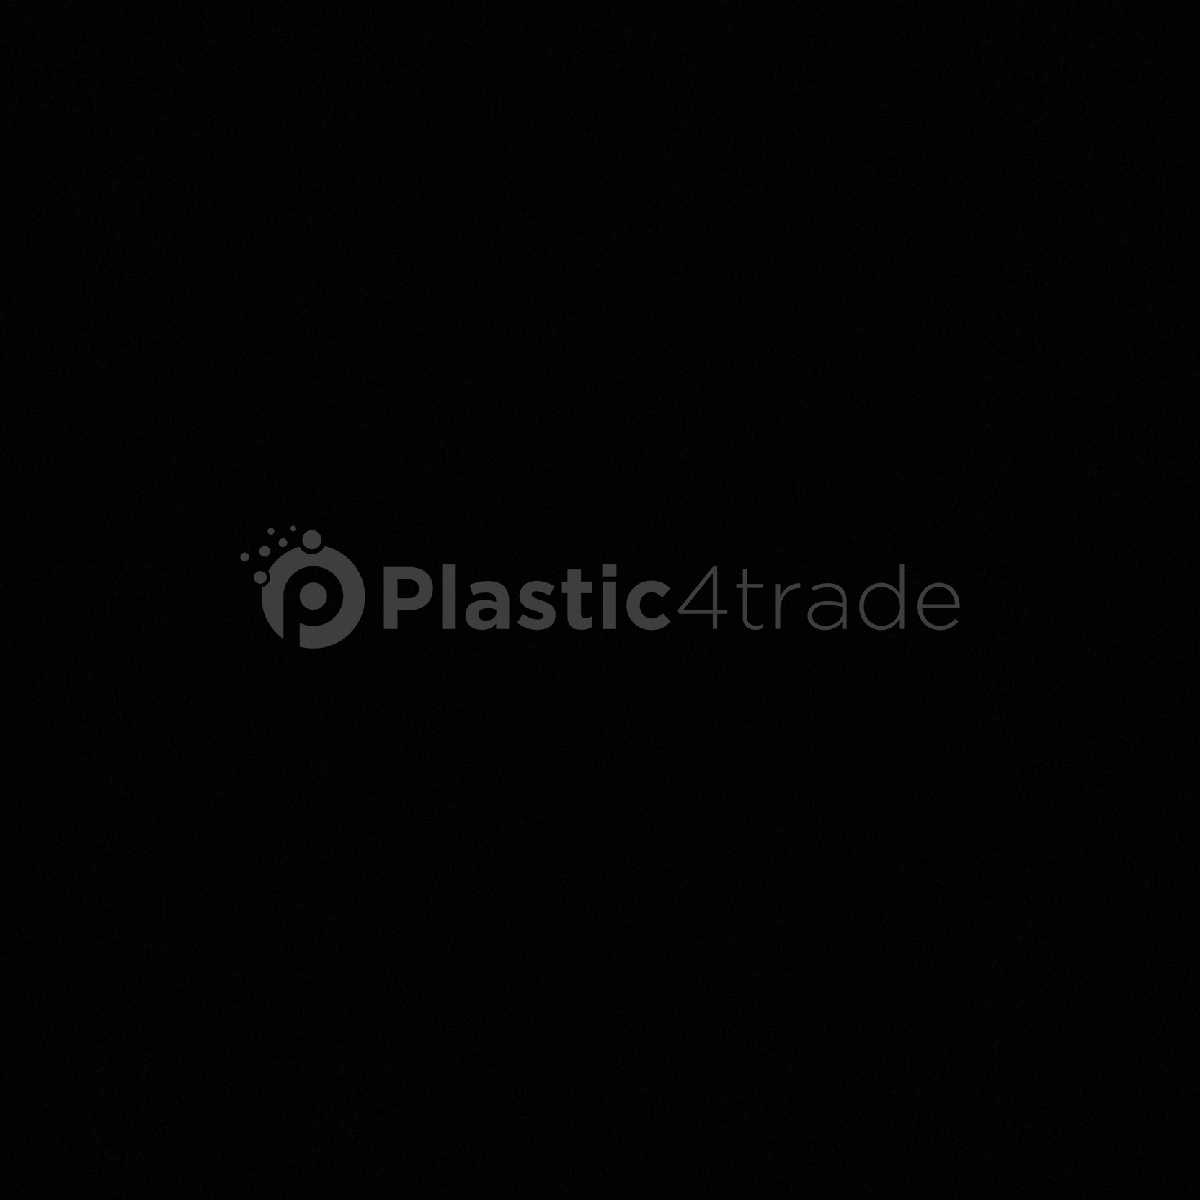 LLDPE FILM HDPE Off Grade RAFFIA gujarat india Plastic4trade